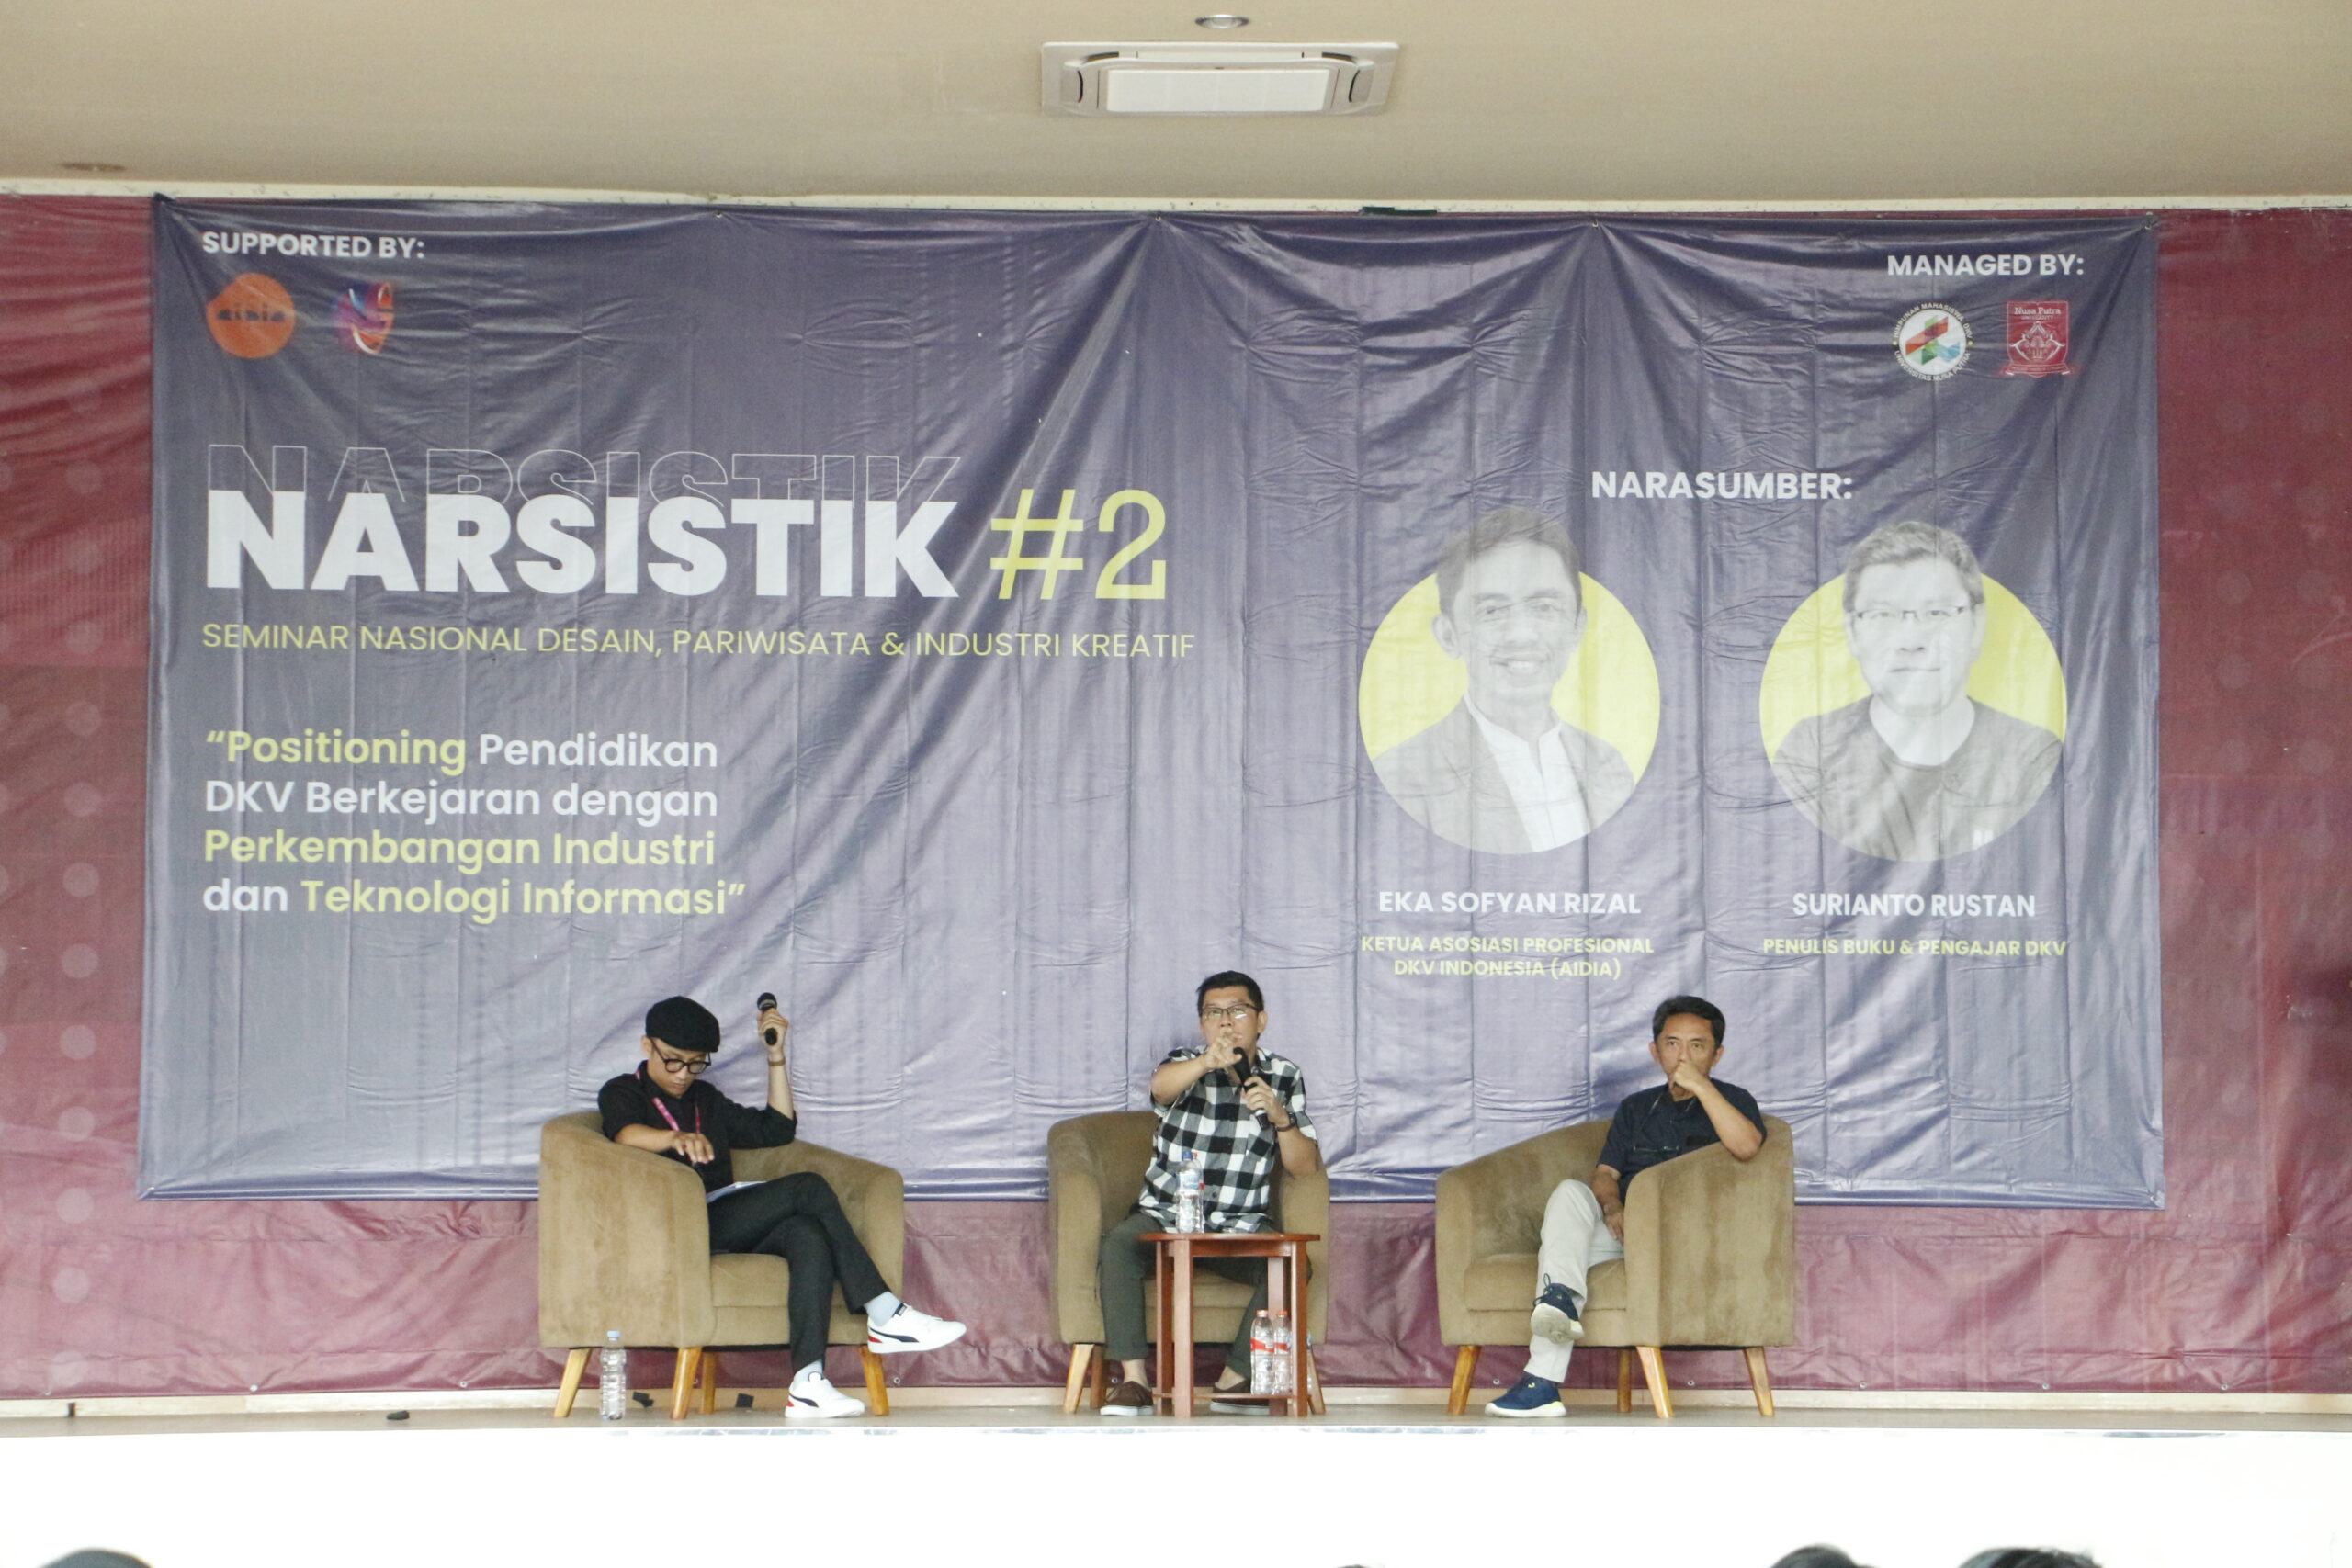 Kedua pembicara ditemani oleh Achmad Dayari yang menjadi Moderator di NARSISTIK #2